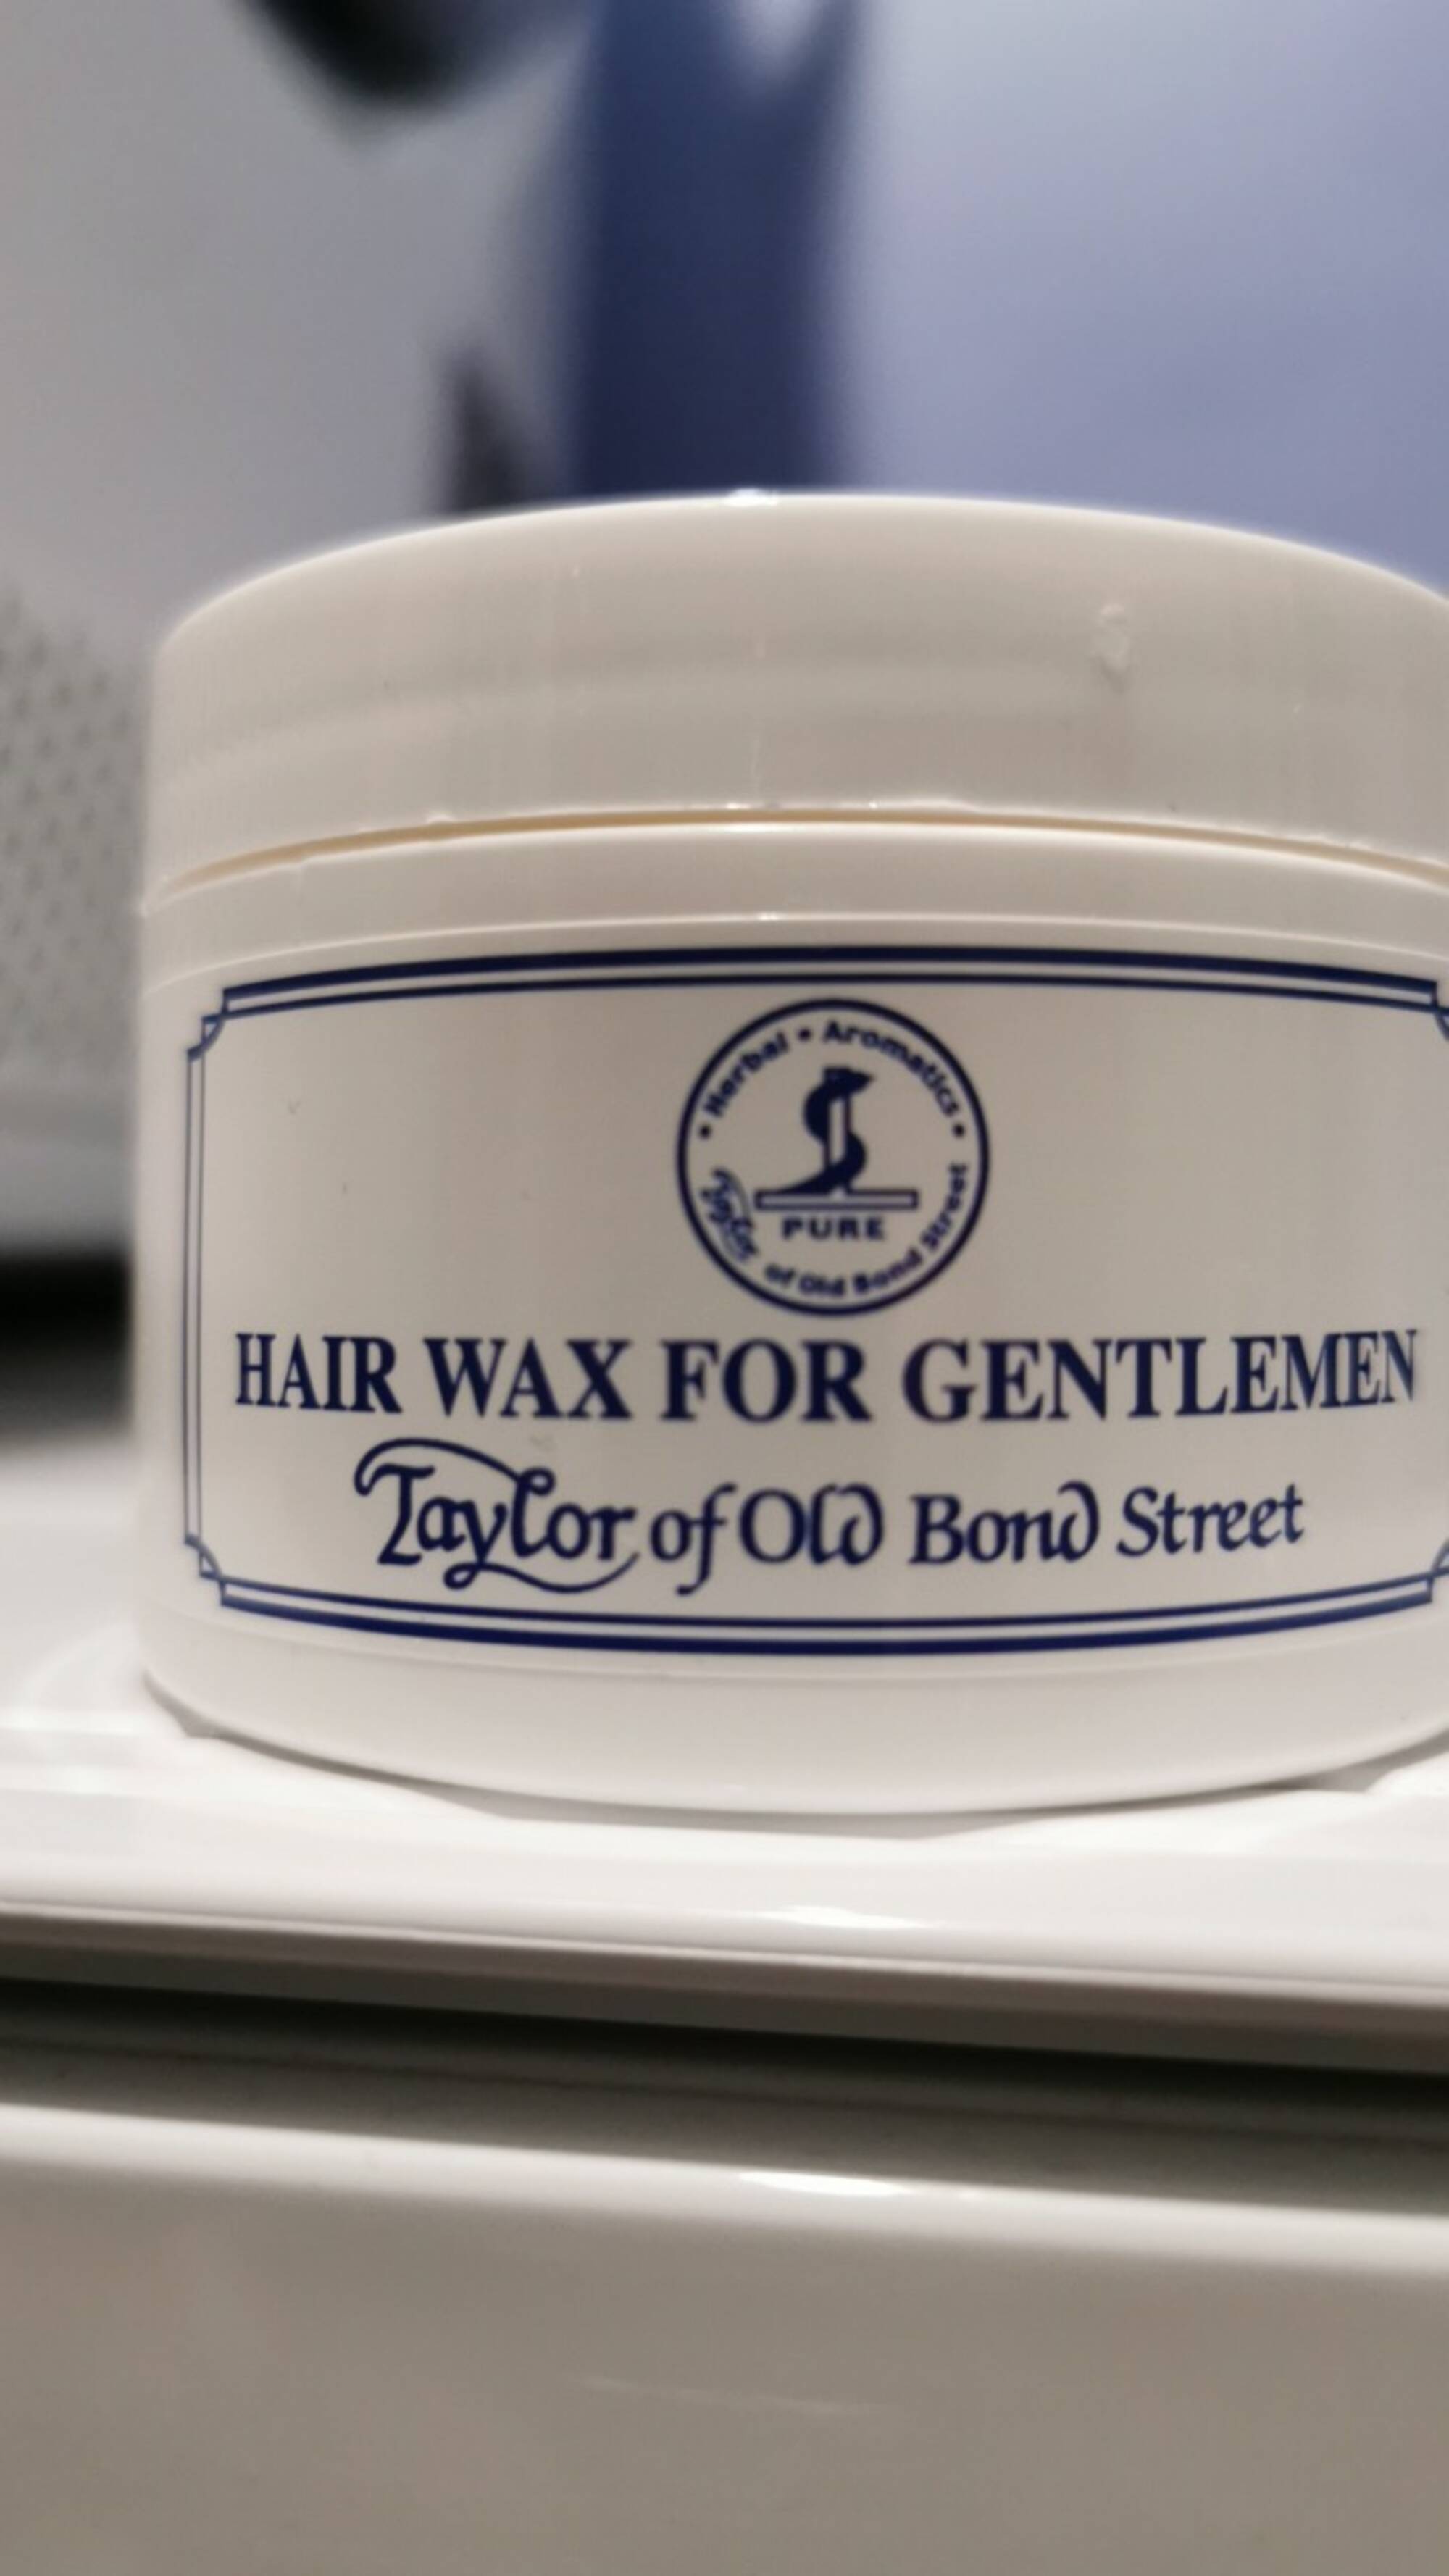 TAYLOR OF OLD BOND STREET - Hair wax for gentlemen